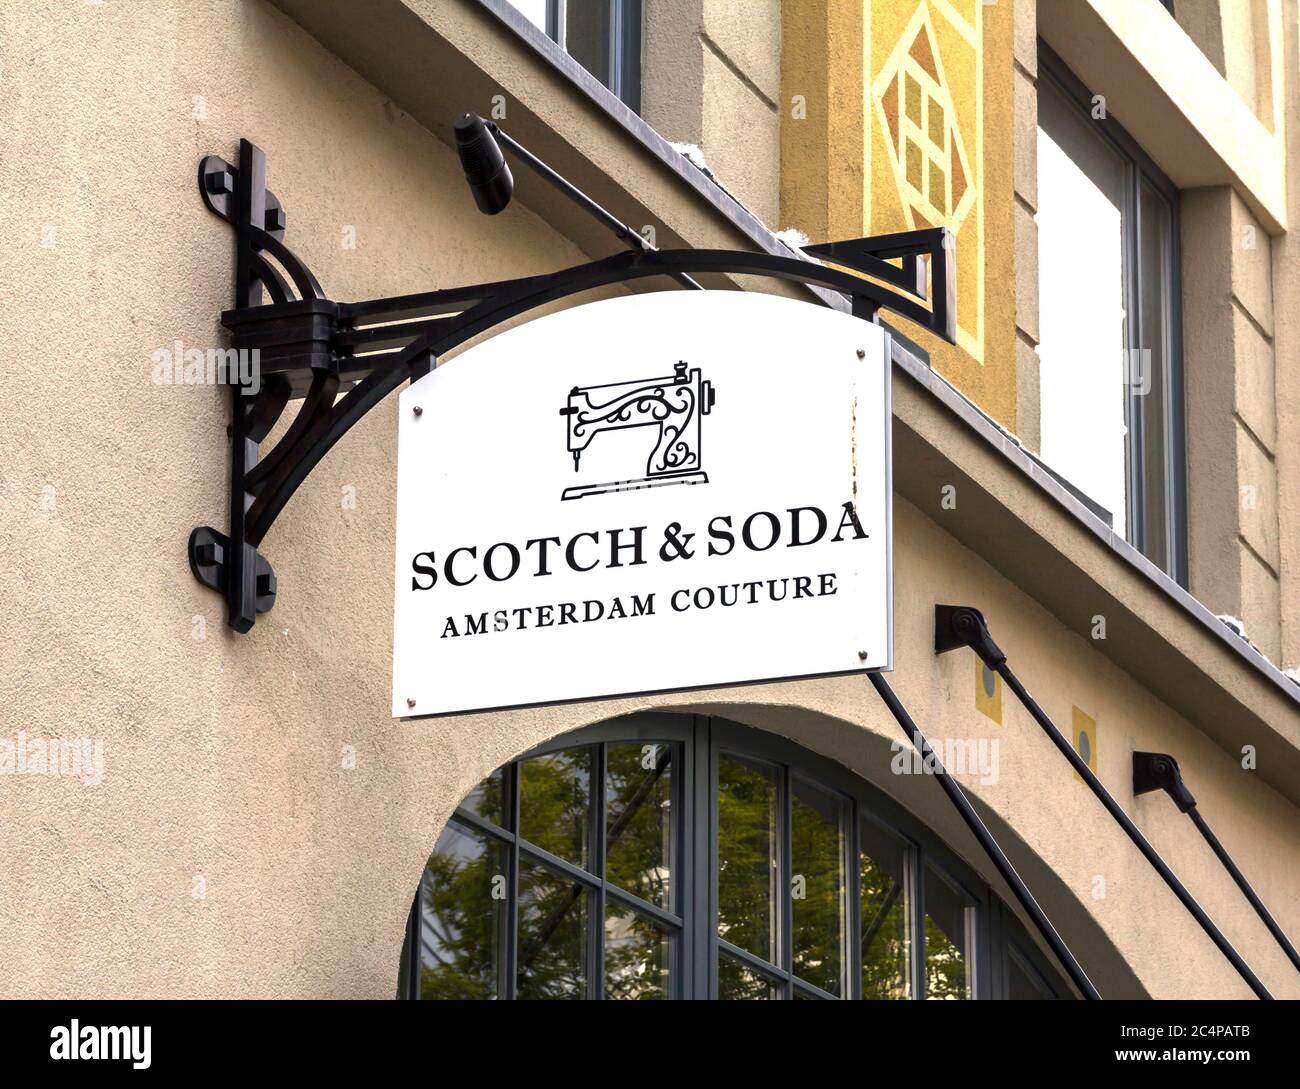 Scotch and soda logo hi-res stock and - Alamy